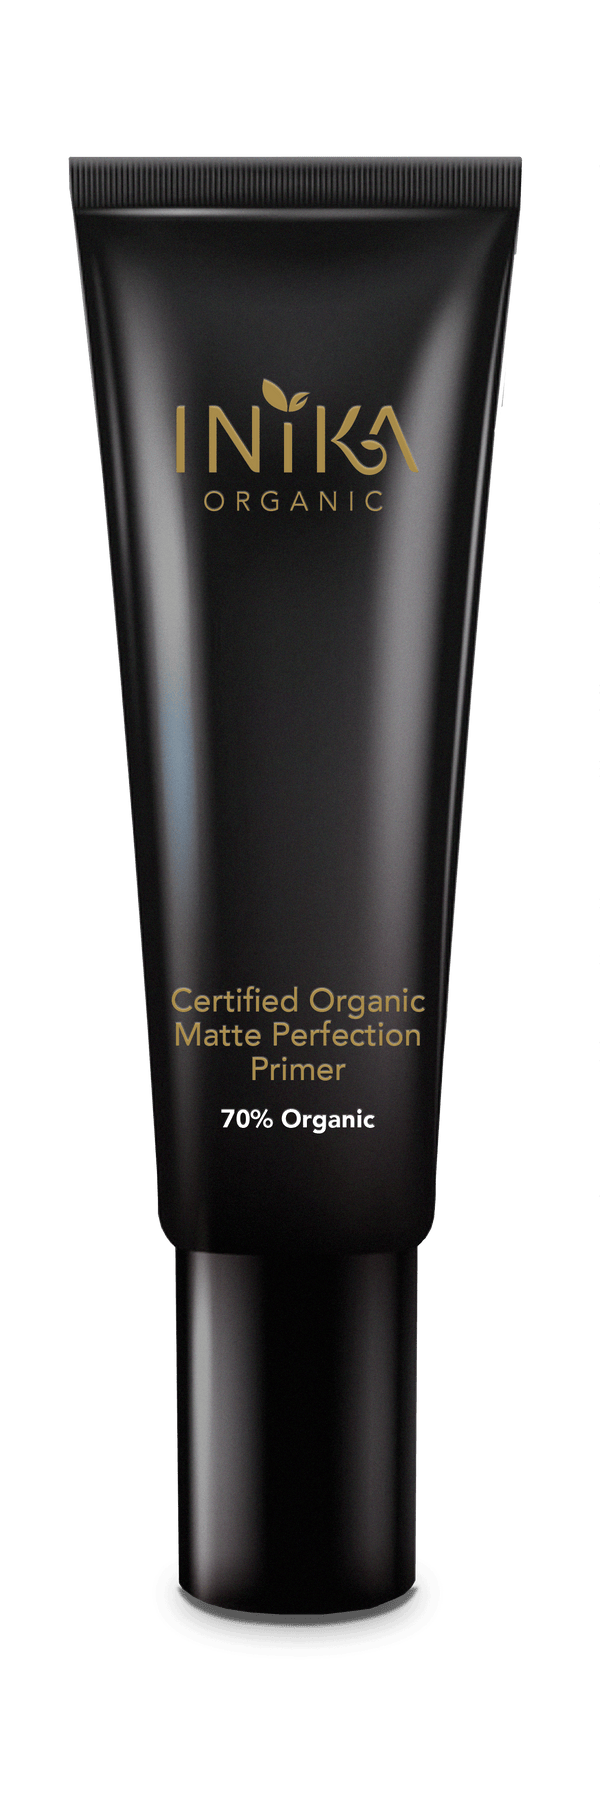 Inika Certified Organic Matte Perfection Primer Natural Makeup Total Beauty Network 